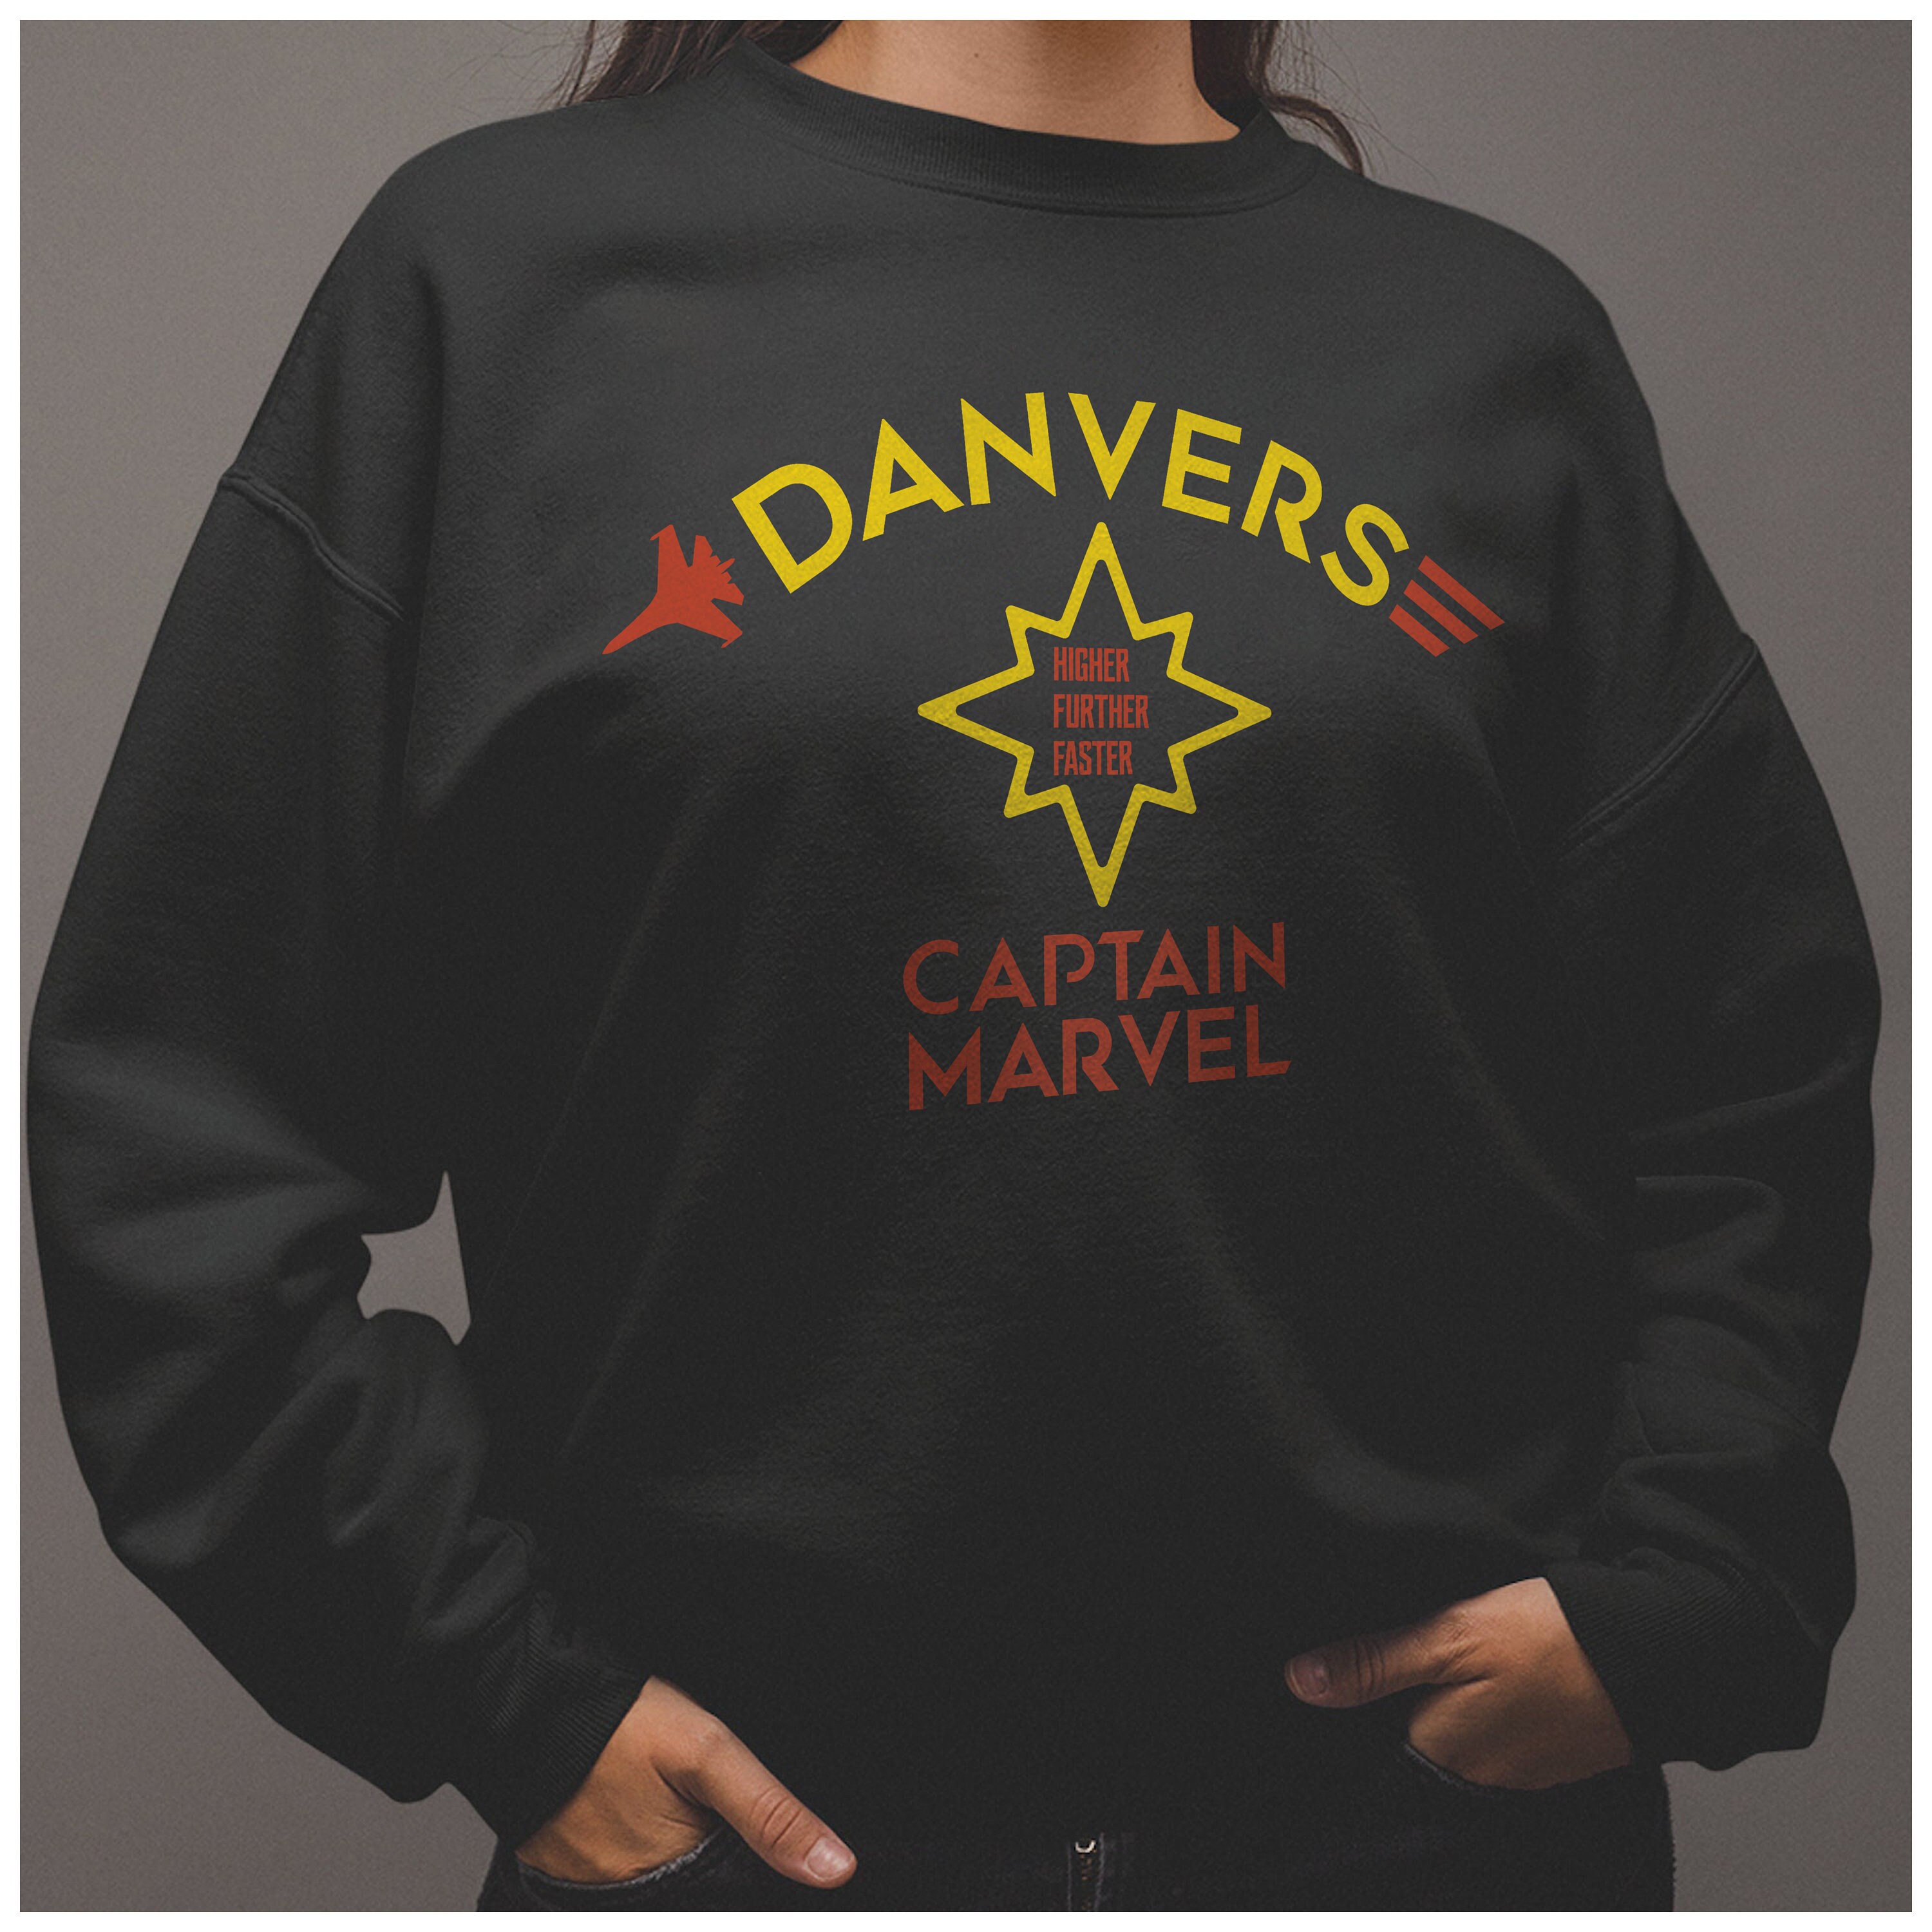 Carol Danvers Captain Marvel Unisex Sweatshirt